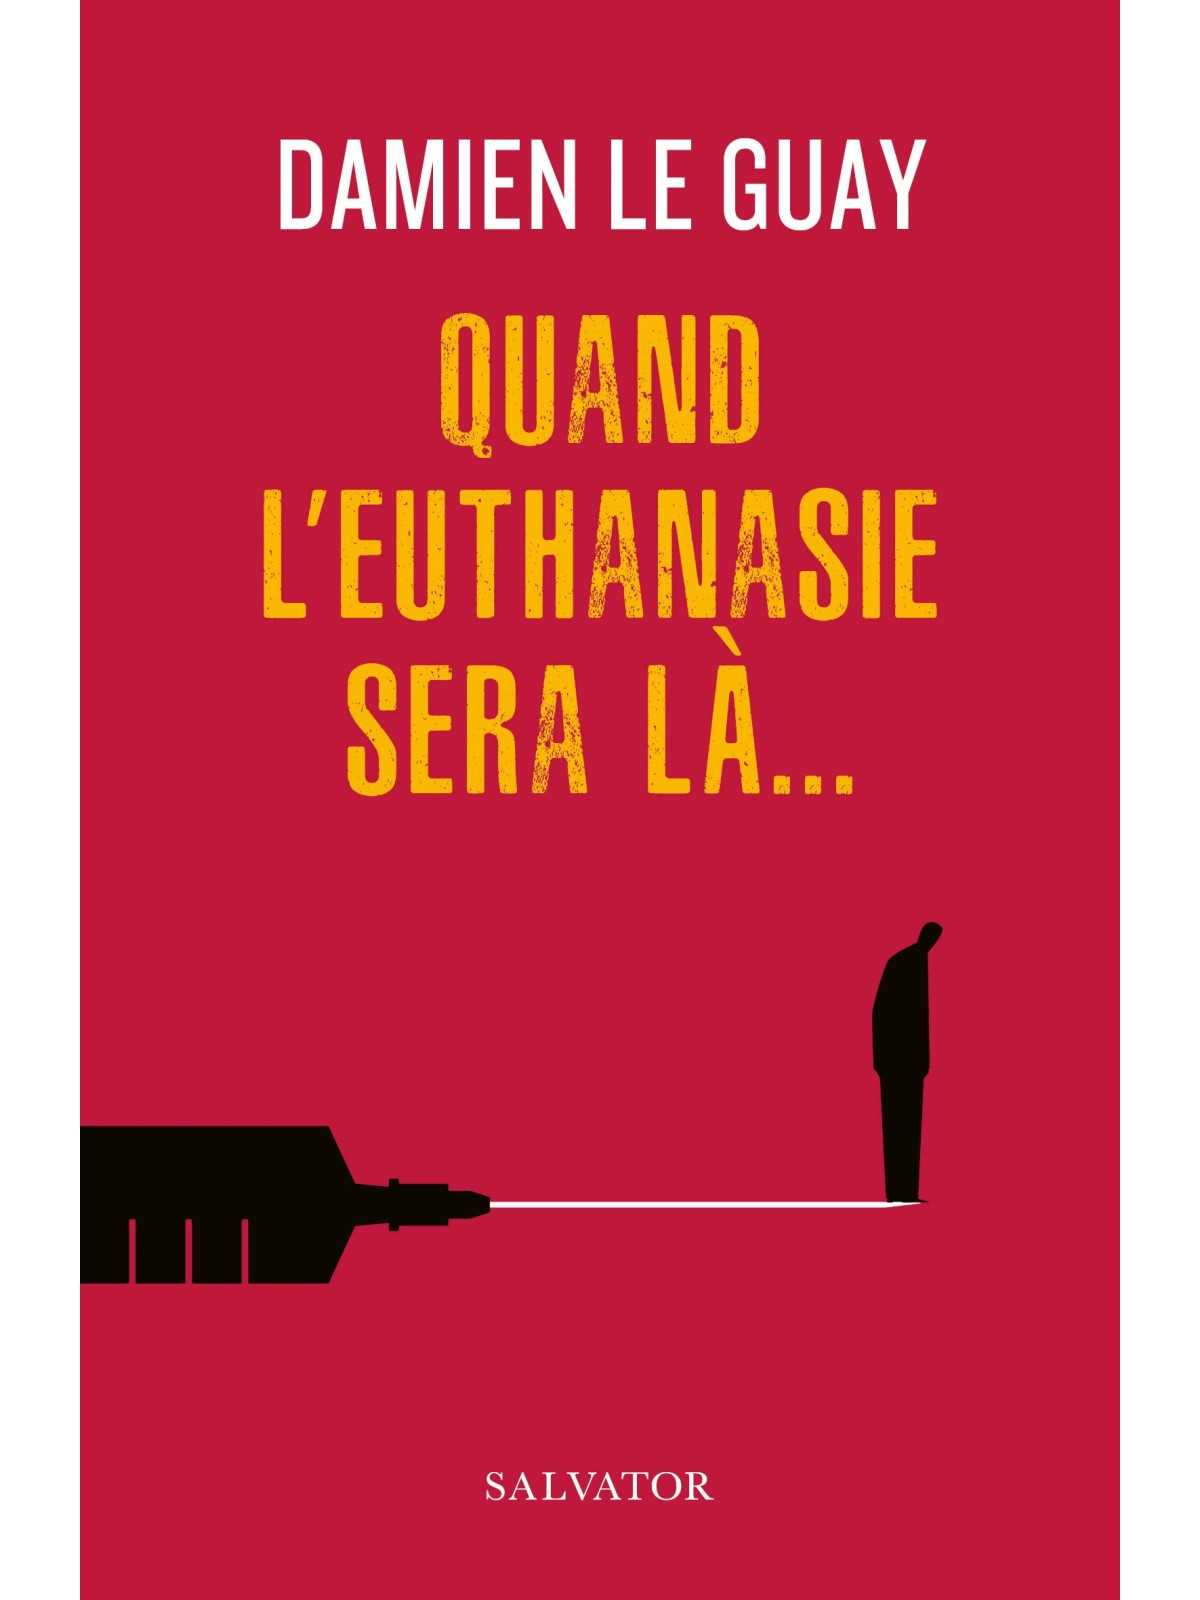 Damien Le Guay: Quand l'euthanasie sera là